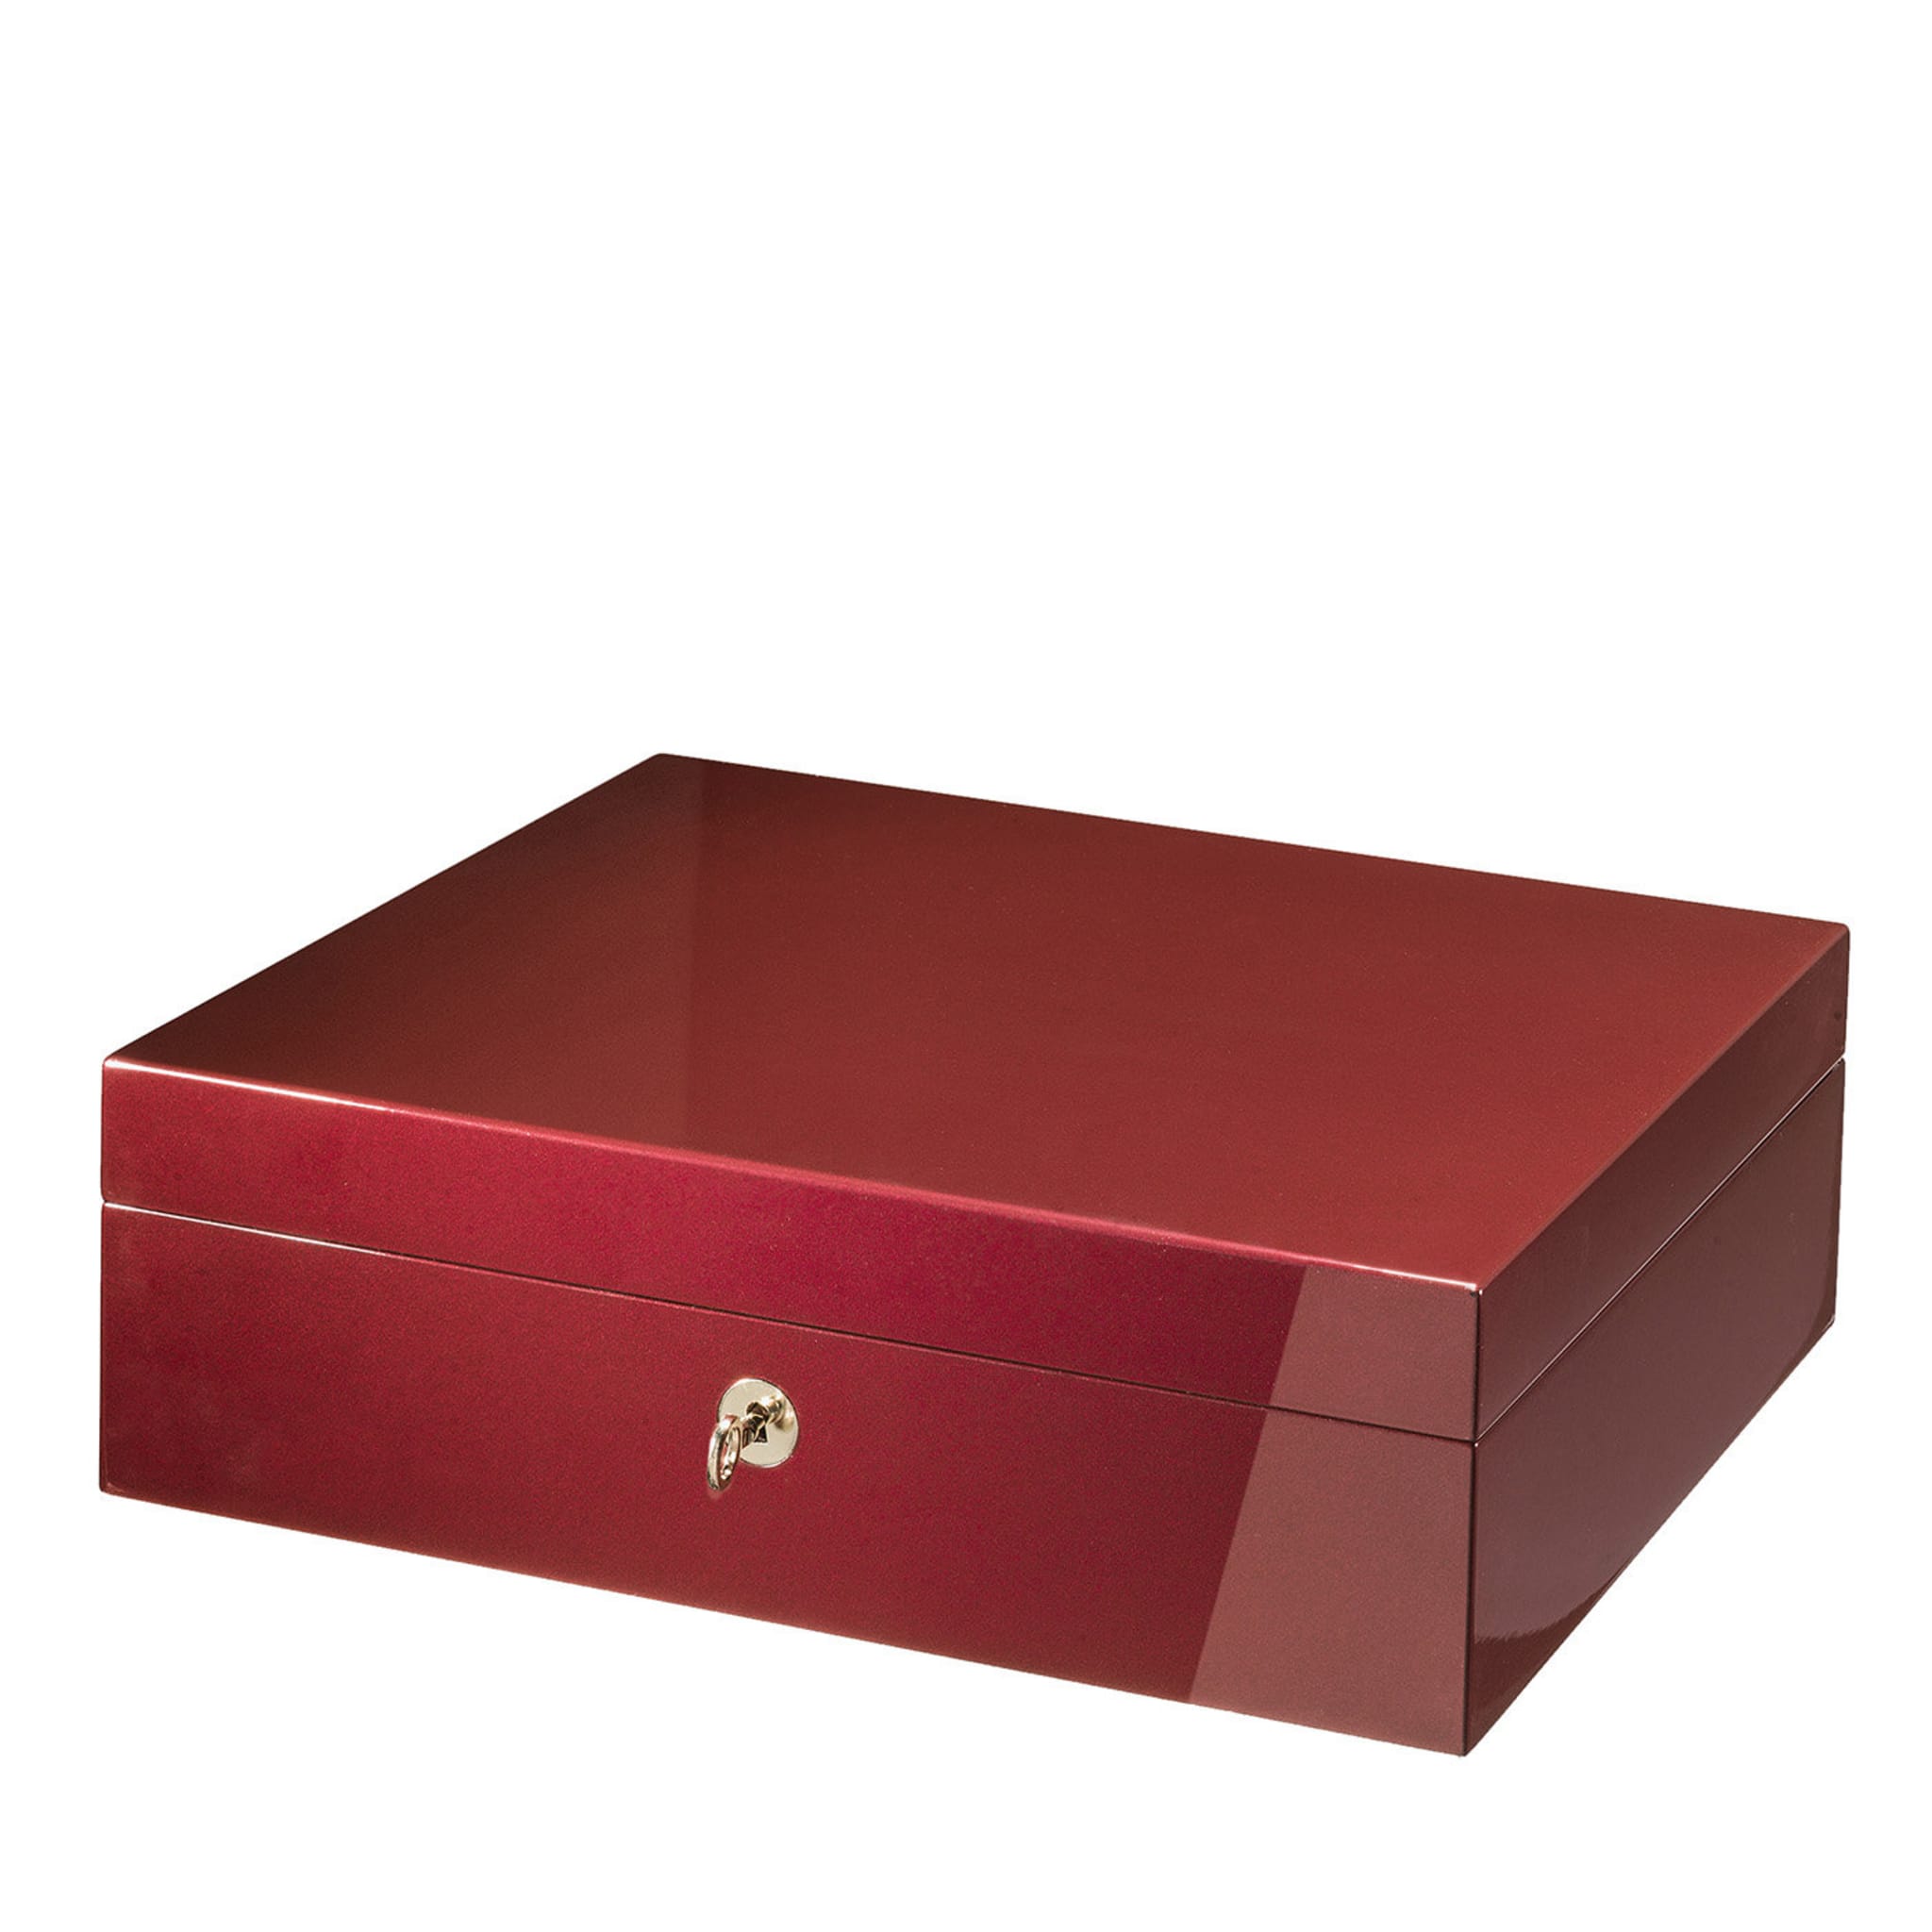 Firenze Ruby Jewelry Box - Main view